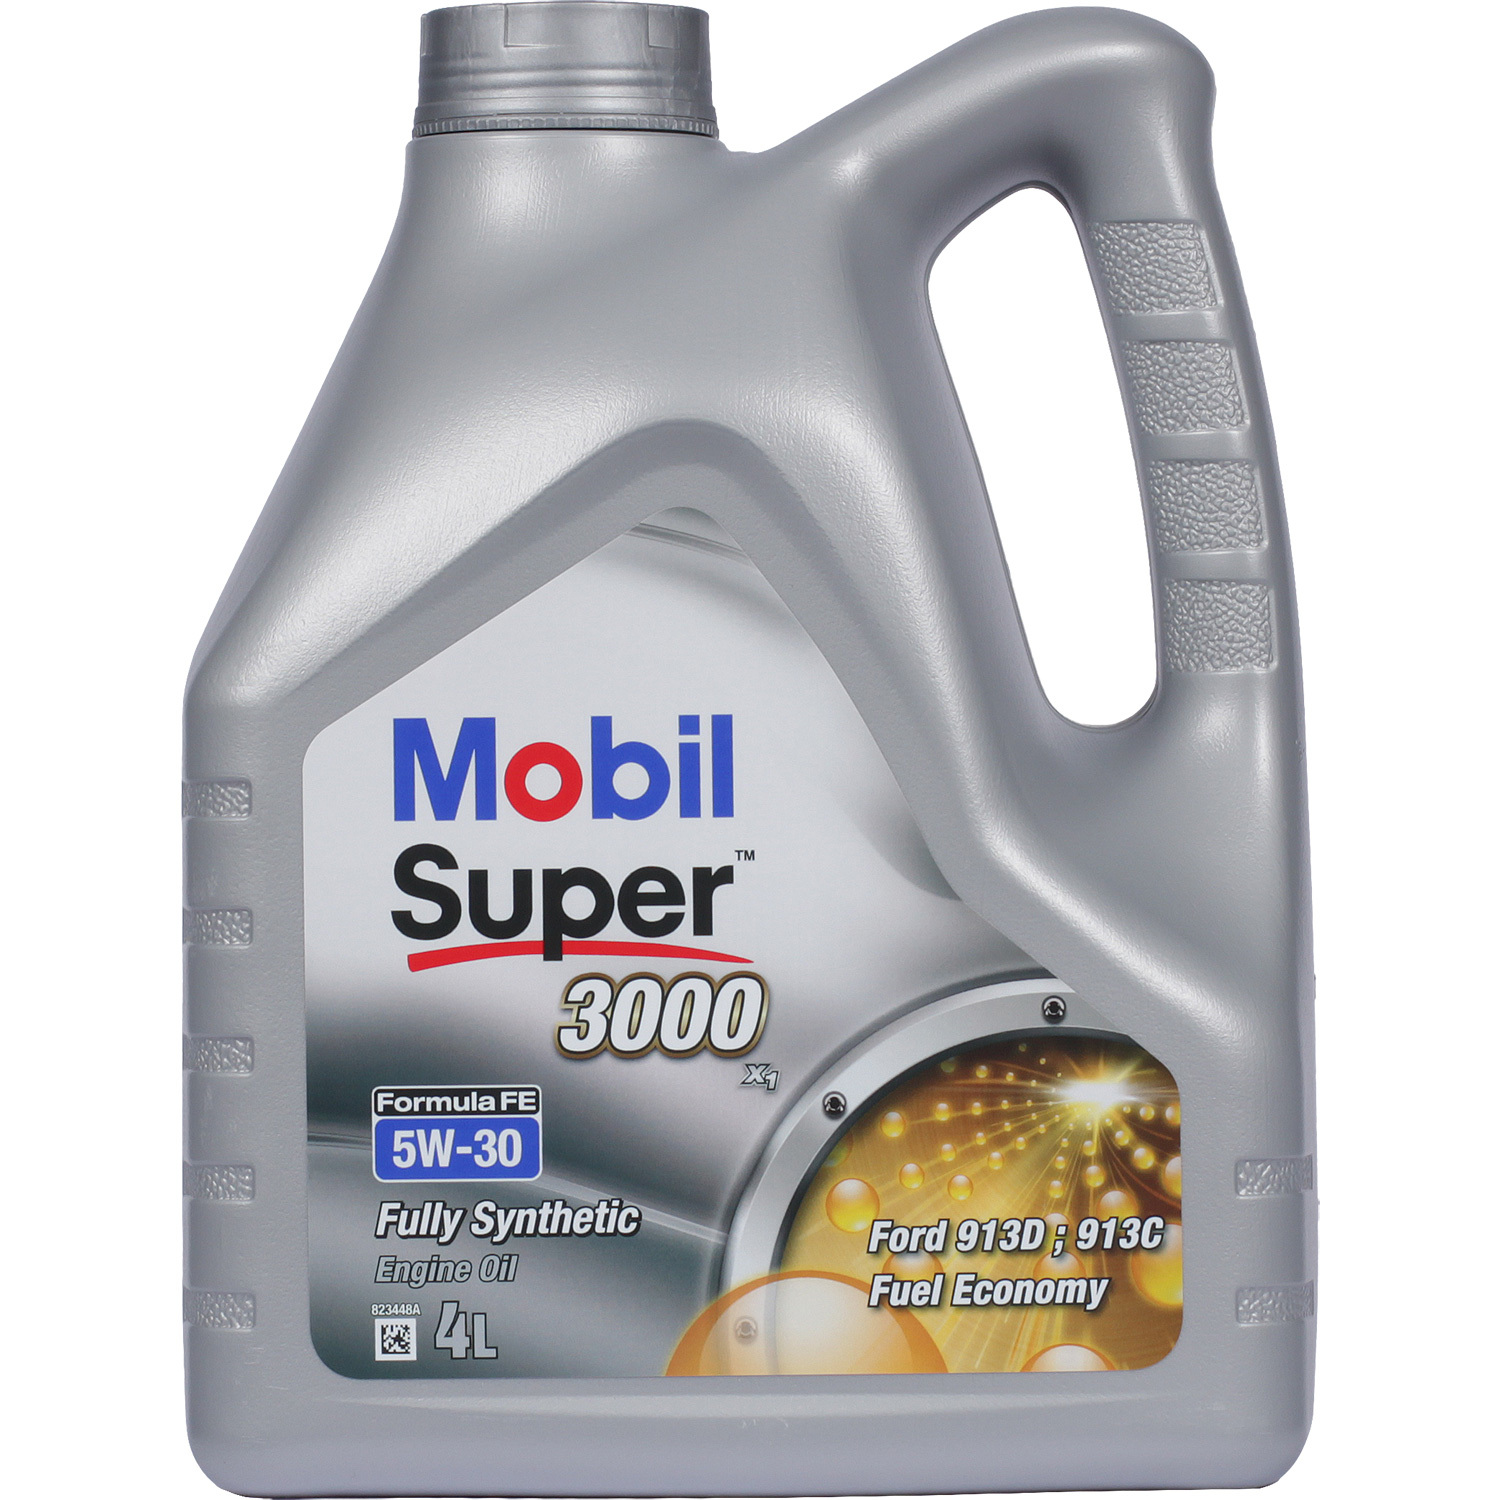 Mobil Моторное масло Mobil Super 3000 X1 Formula FE 5W-30, 4 л масло моторное mobil super 3000 xe 5w–30 синтетическое 1 л